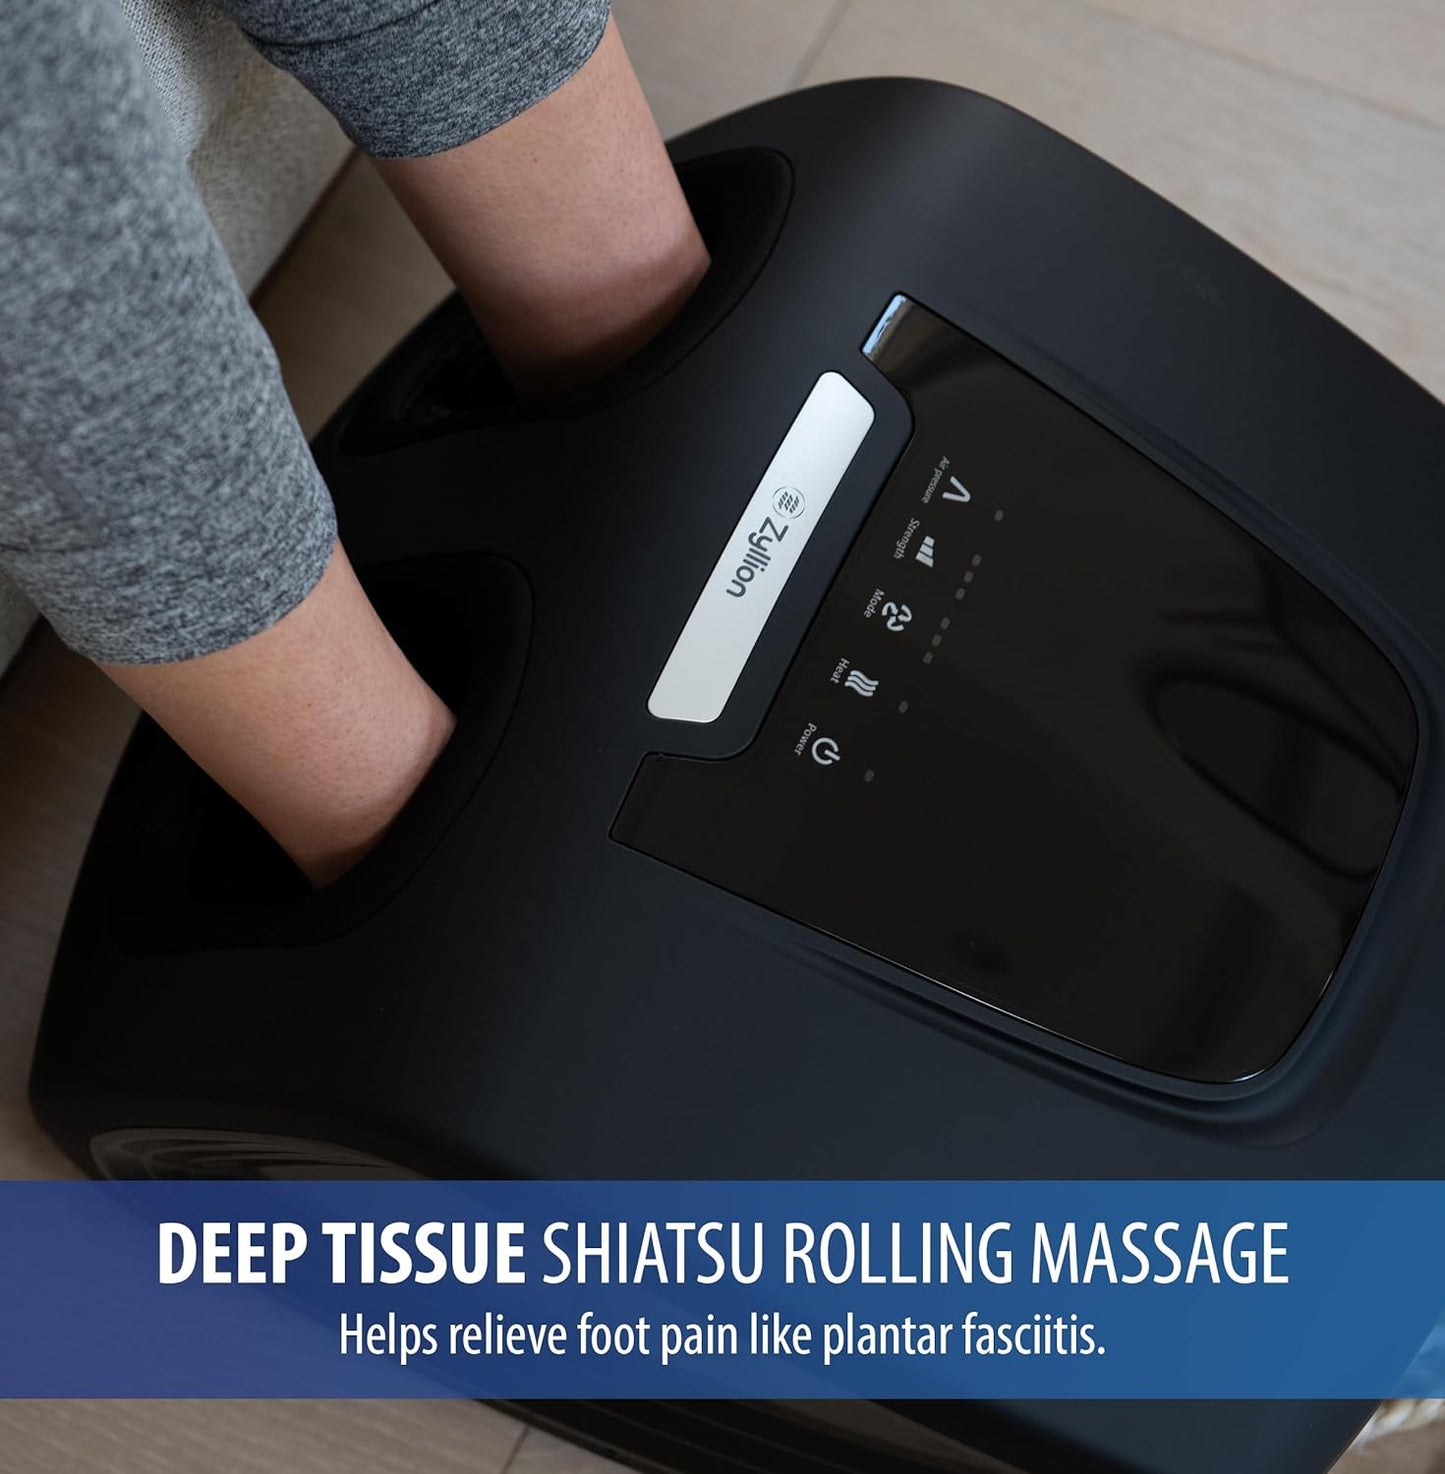 Zyllion Shiatsu Foot Massager with Heat - Deep Tissue Kneading Heated Rolling Foot Massage Machine for Plantar Fasciitis Foot Pain Relief, Fits Up to Size 13 Feet - ZMA-21-BK (Black)